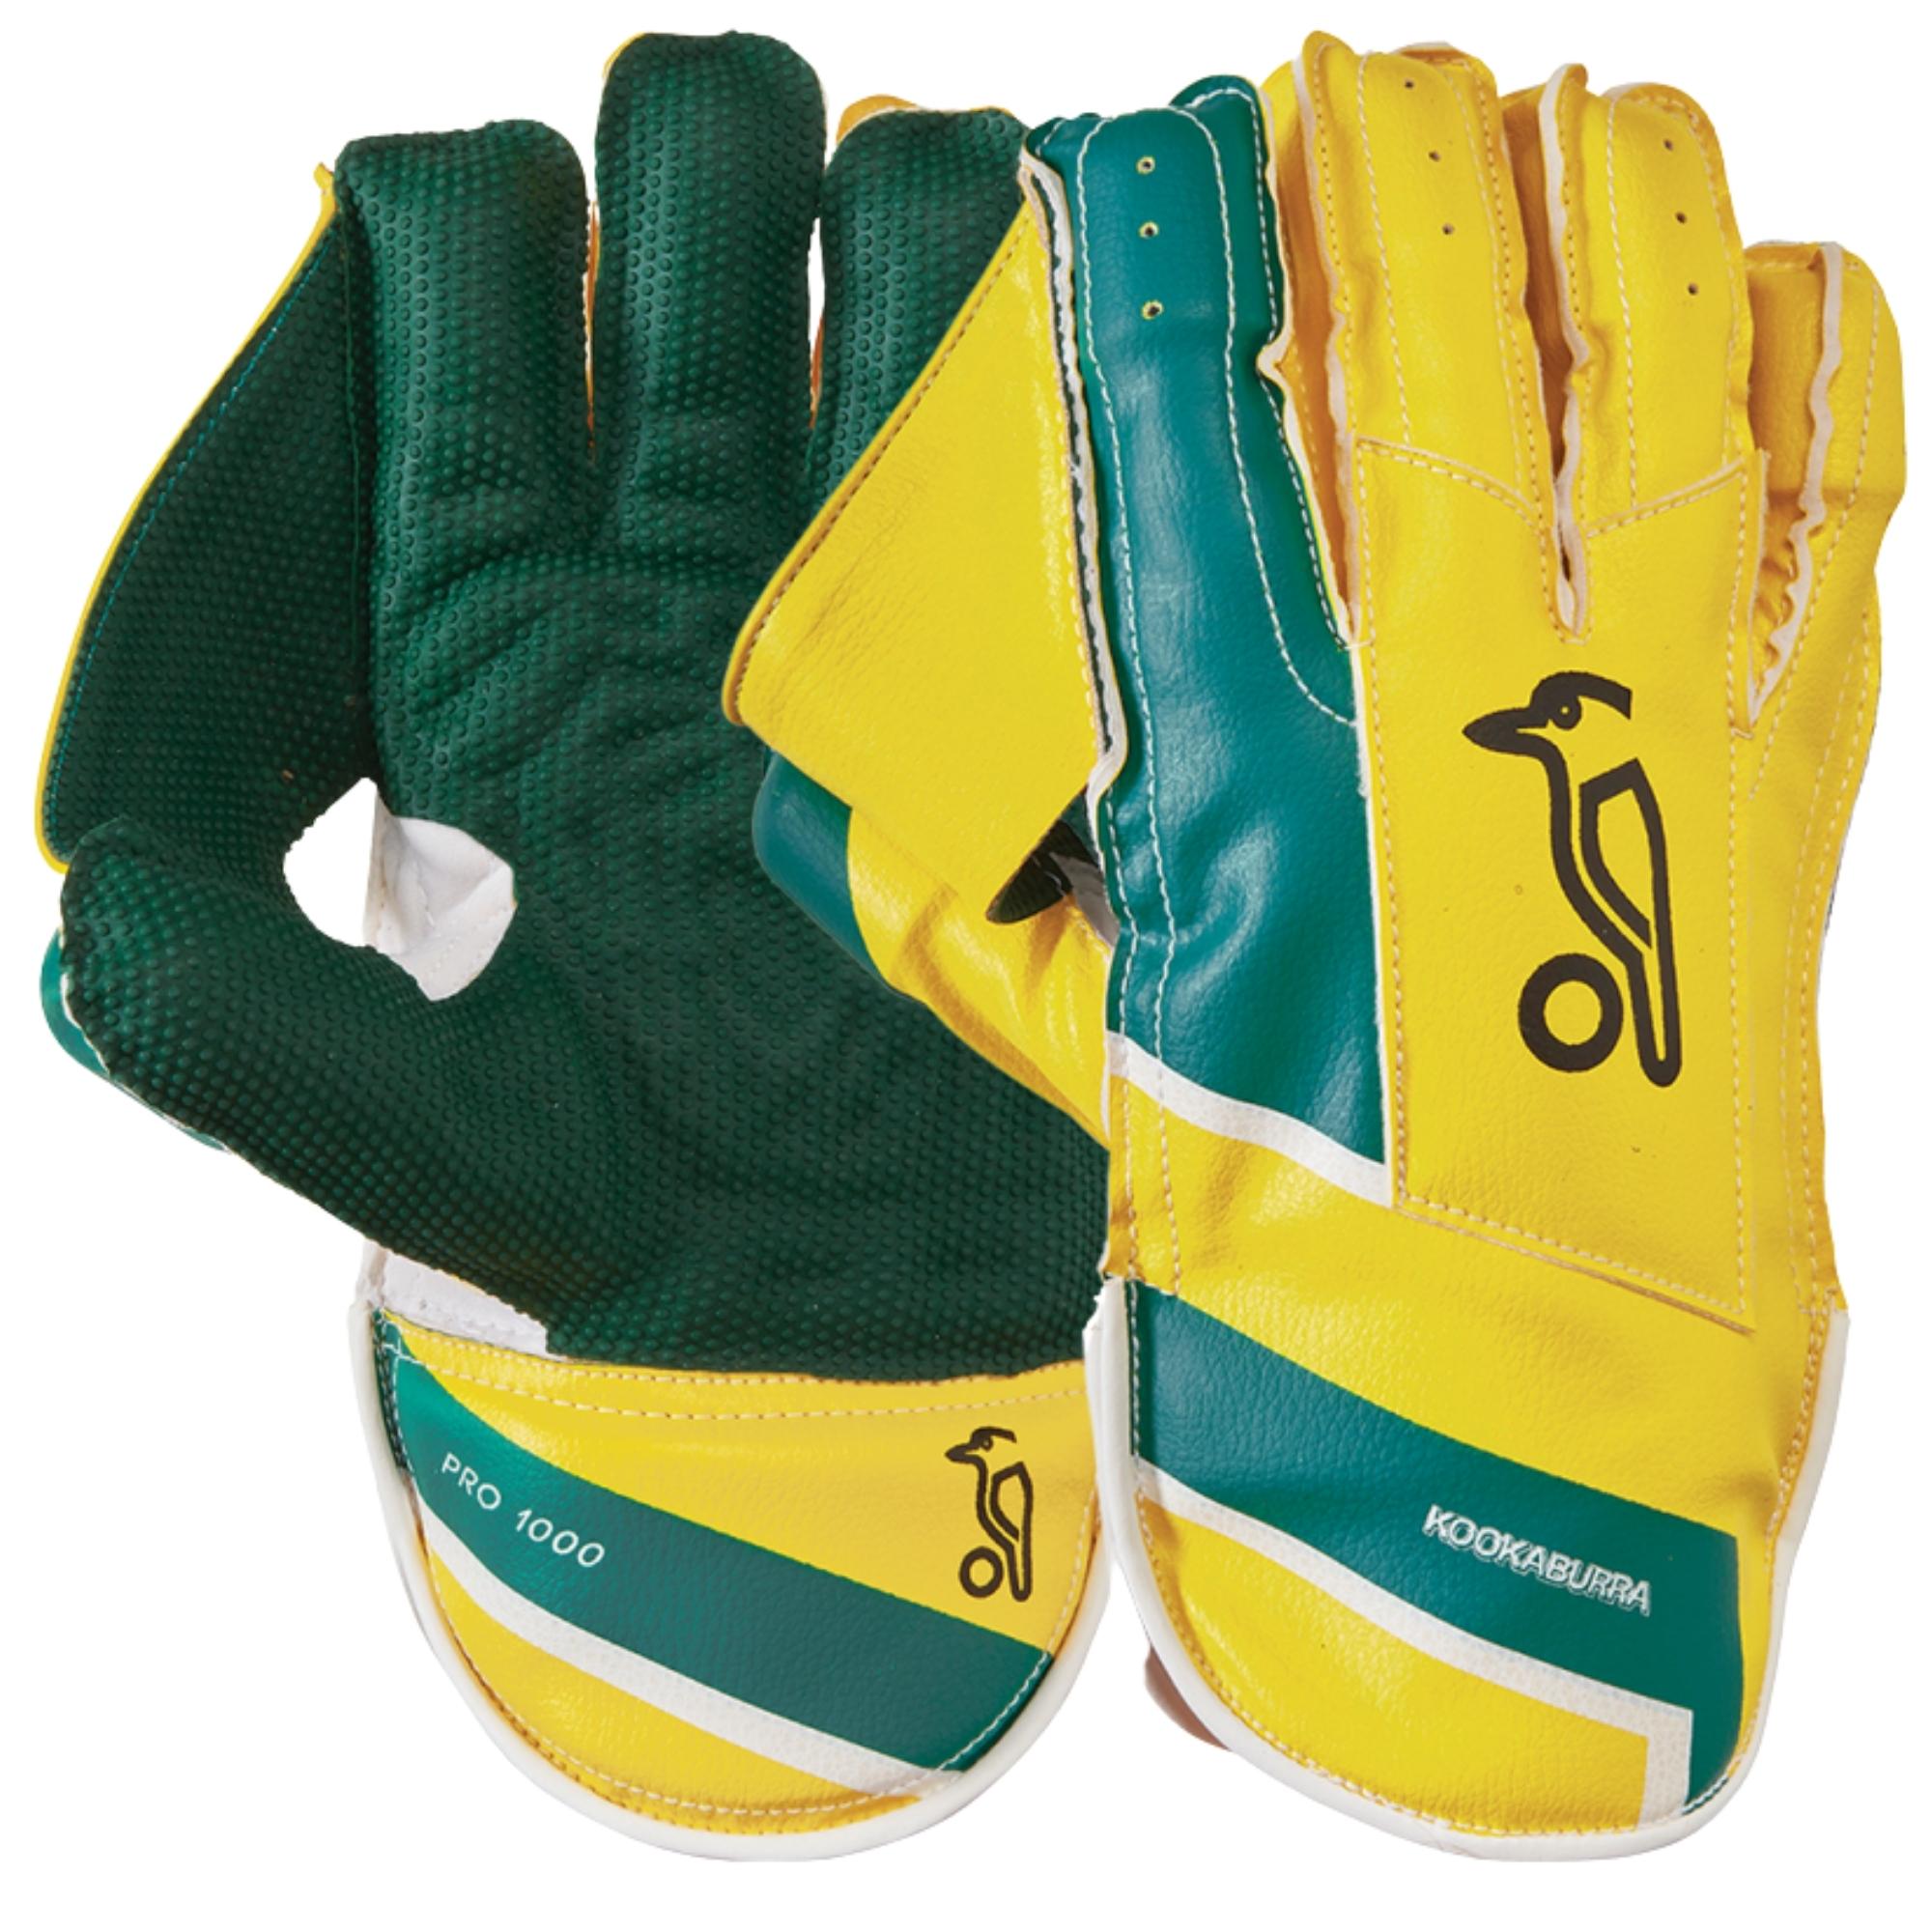 Kookaburra Wicket Keeping Gloves Pro 1000